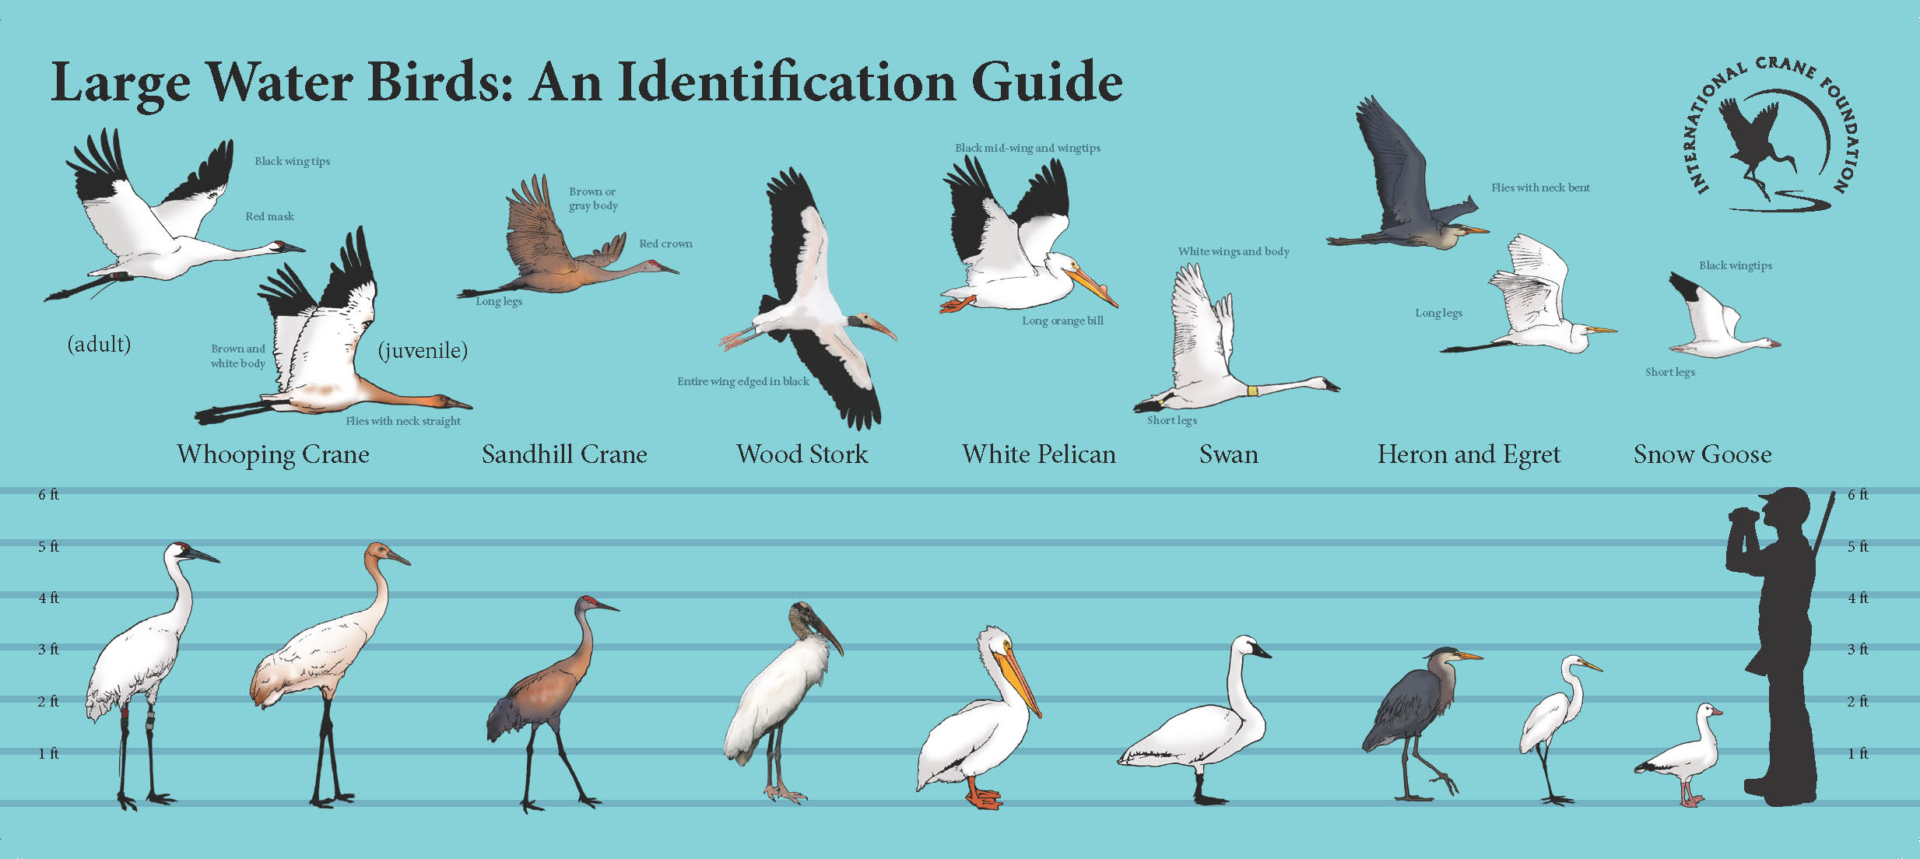 Large Bird ID Guide